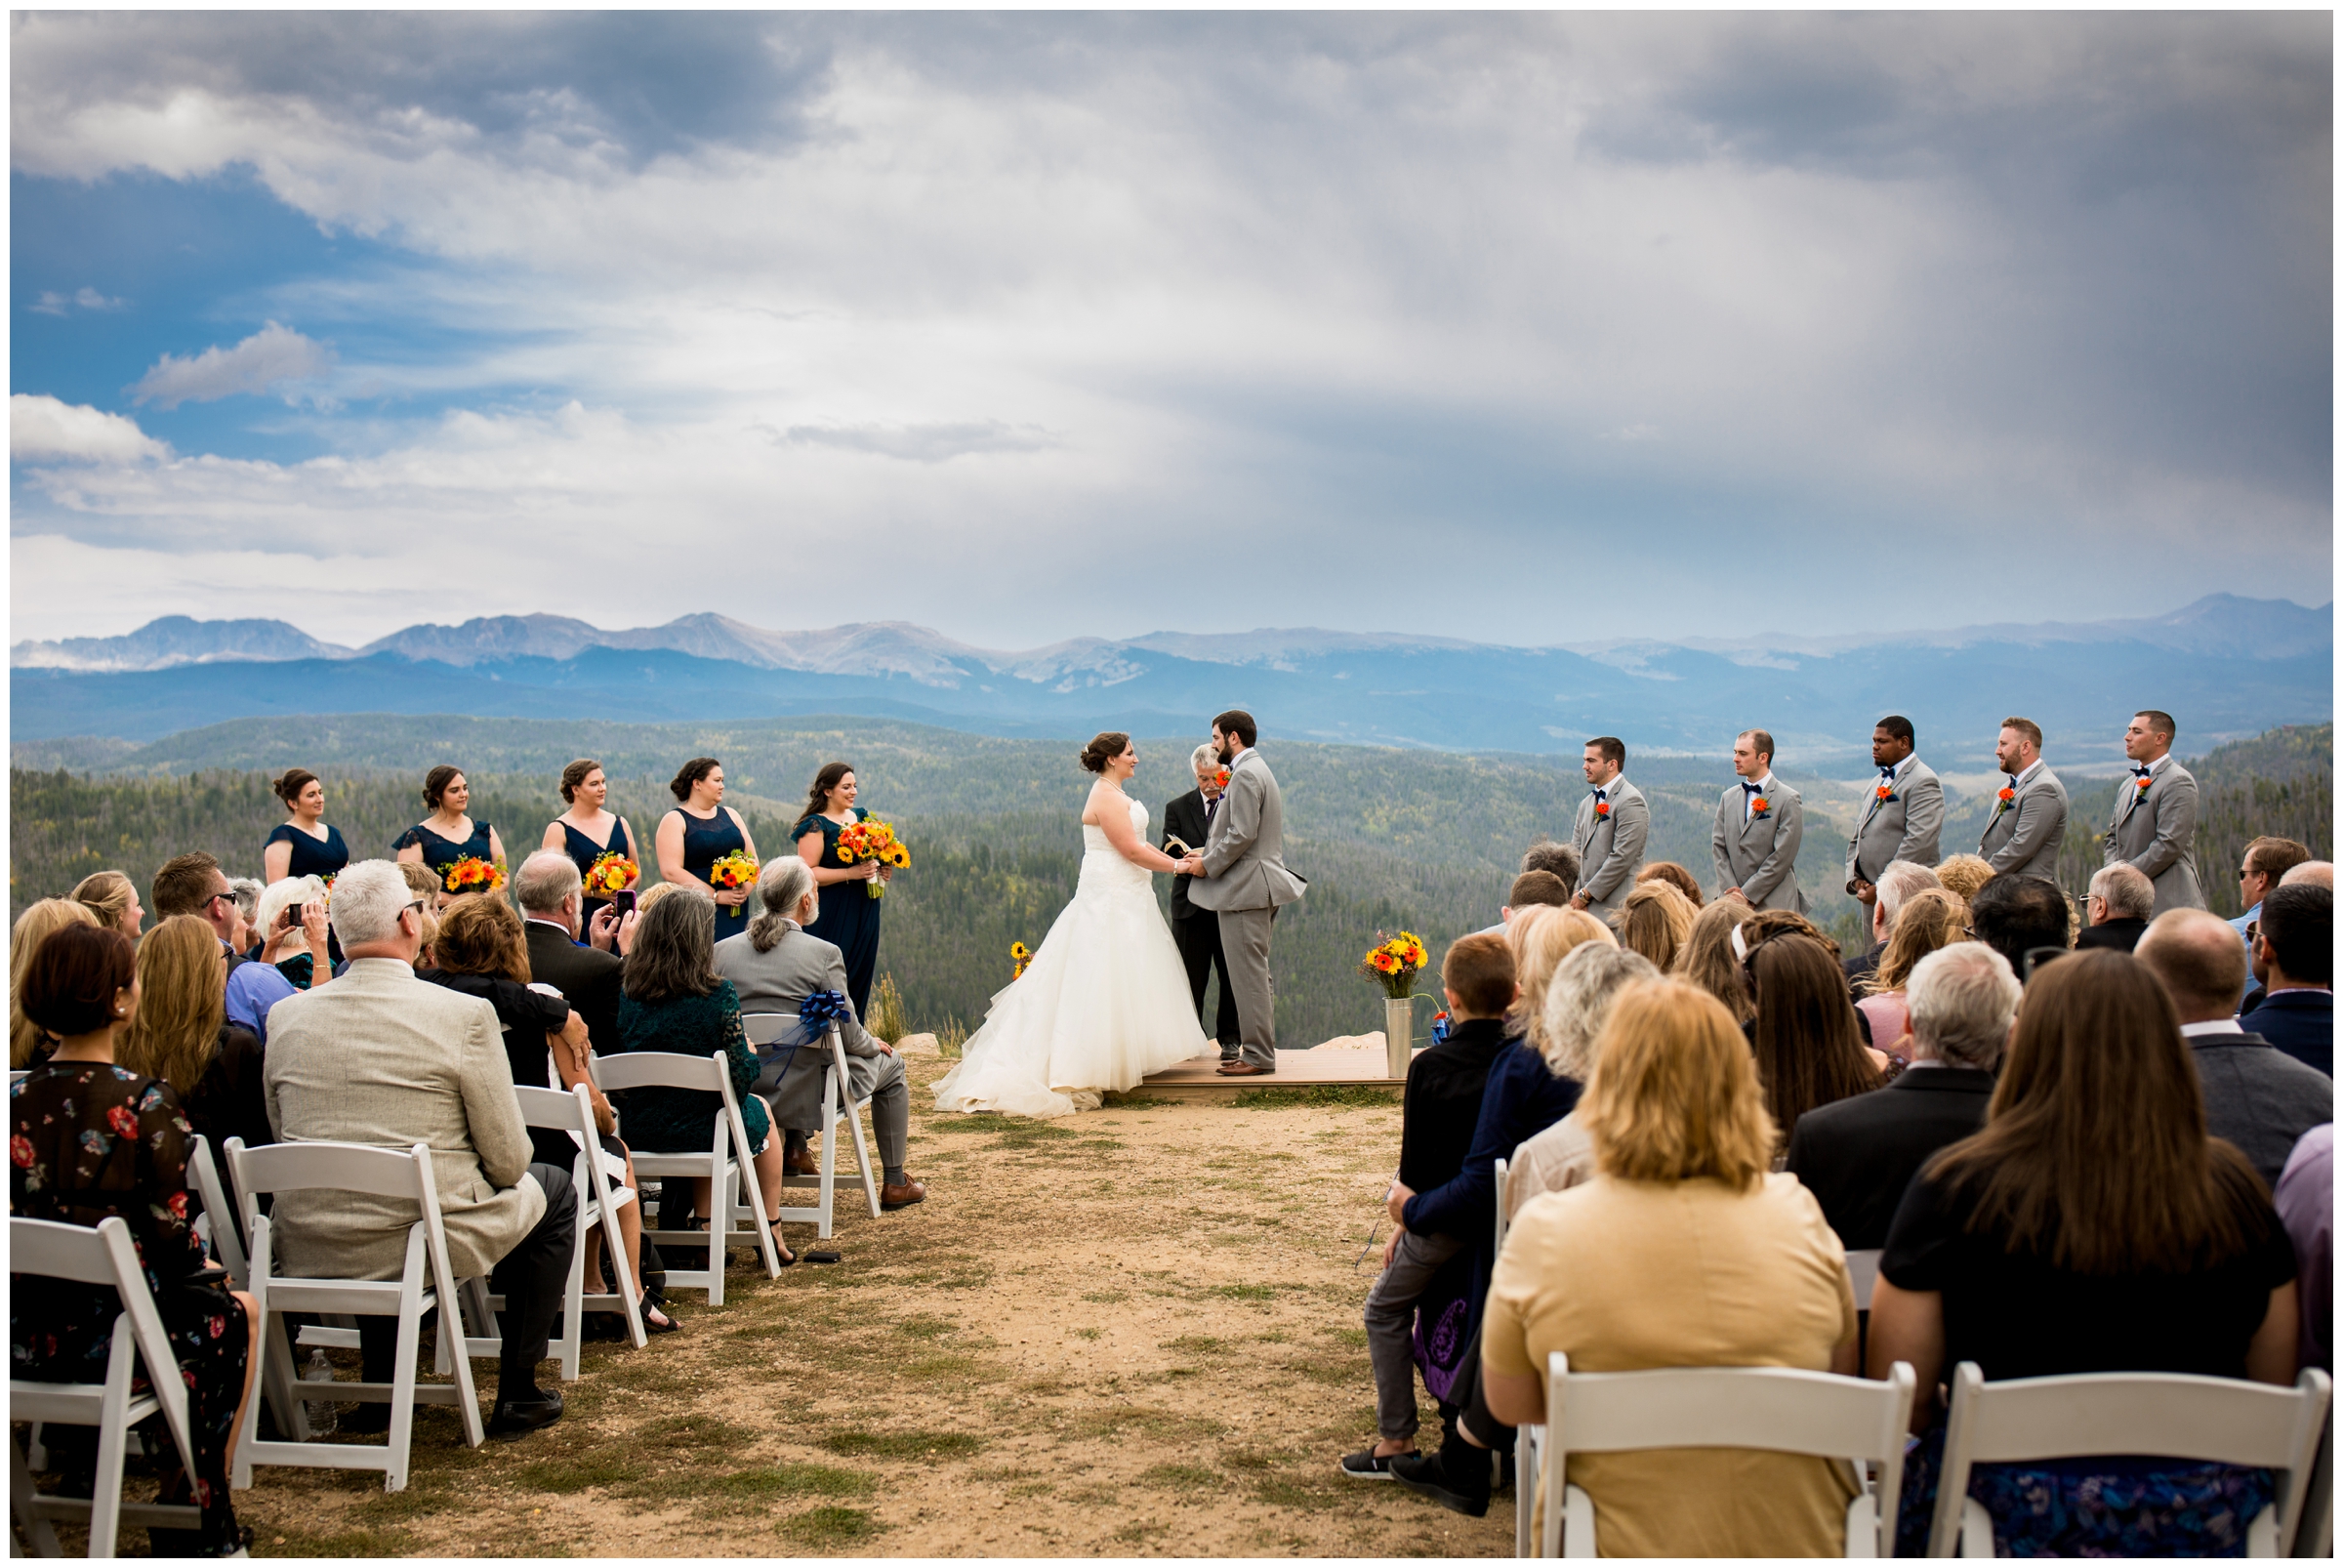 Fall Granby Ranch wedding ceremony photos by Colorado mountain photographer Plum Pretty Photography